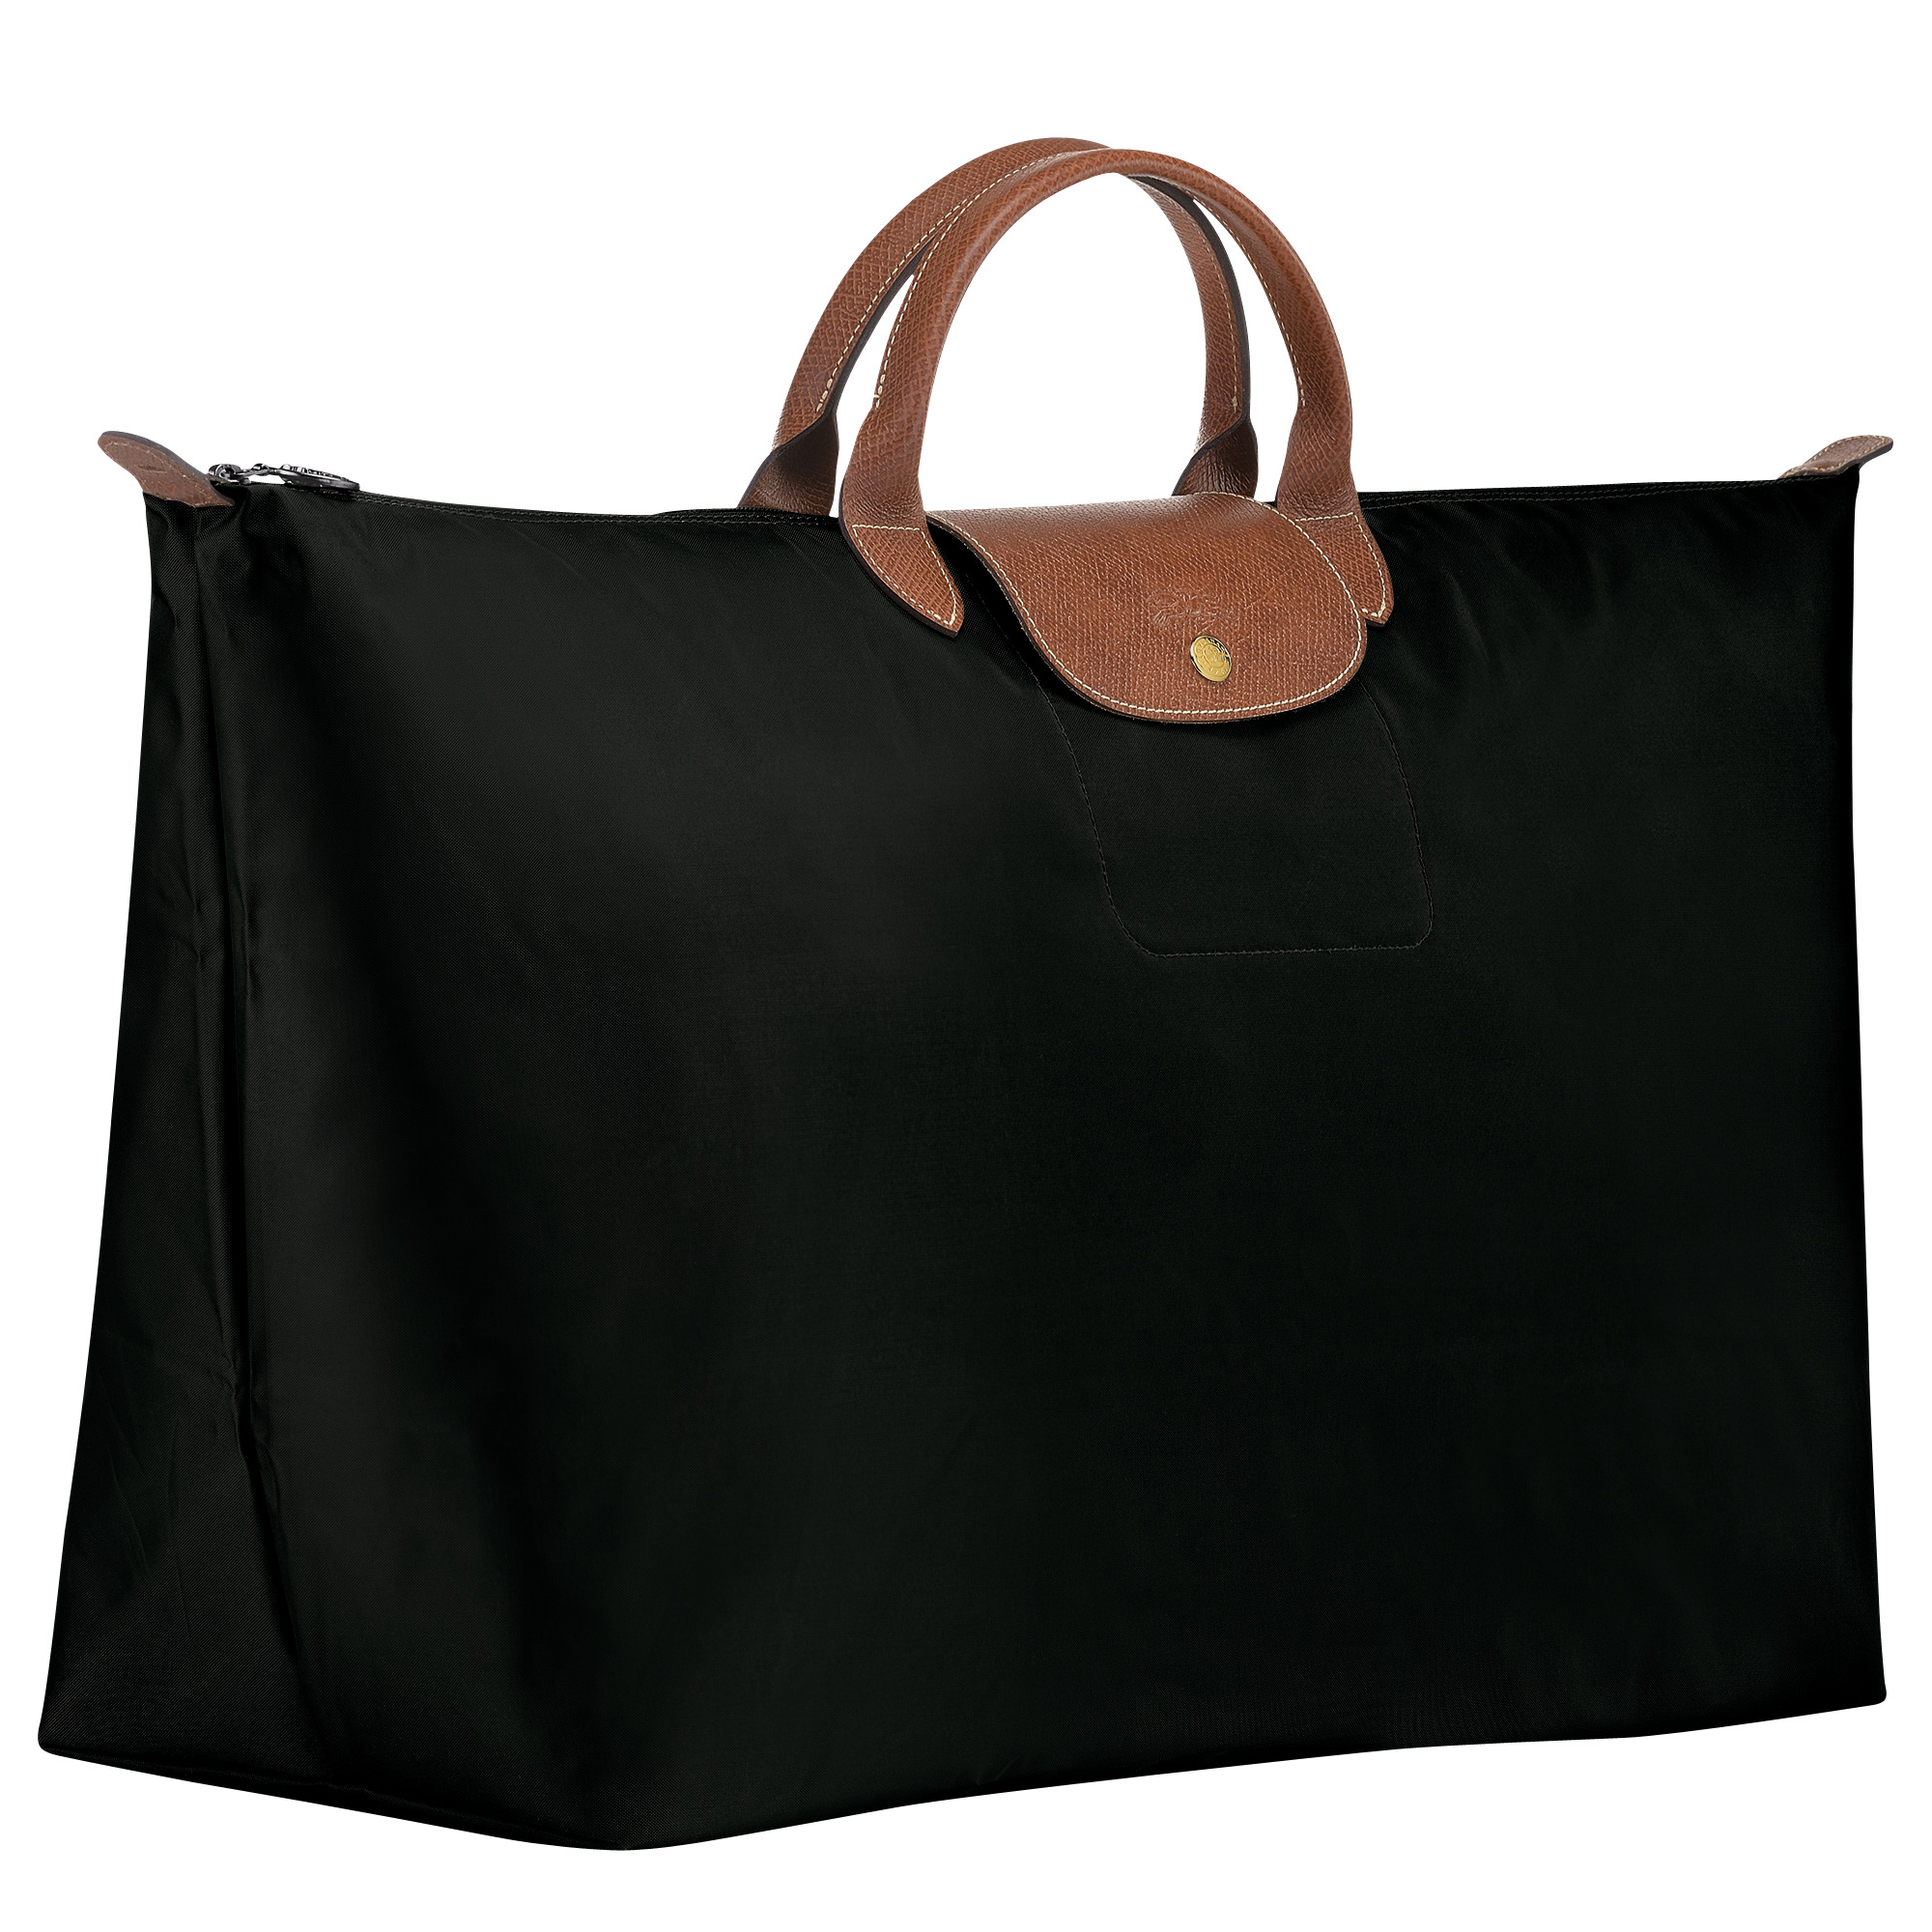 Le Pliage Original M Travel bag Black - Recycled canvas - 3